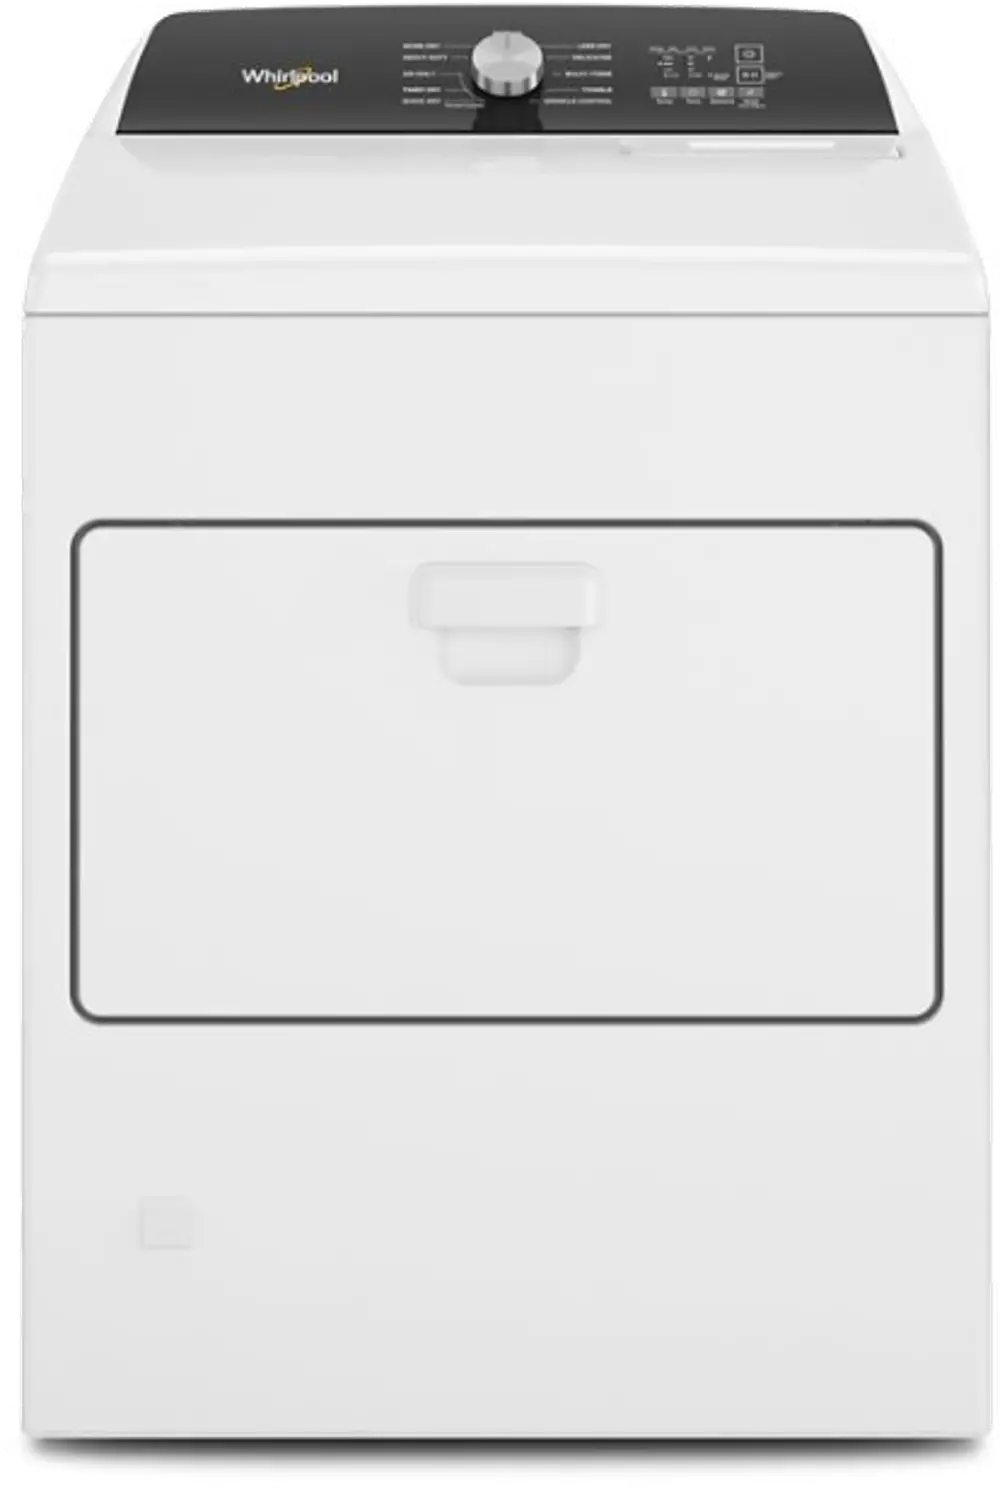 WGD5010LW Whirlpool Gas Dryer W5010 - White 7.0 cu ft-1